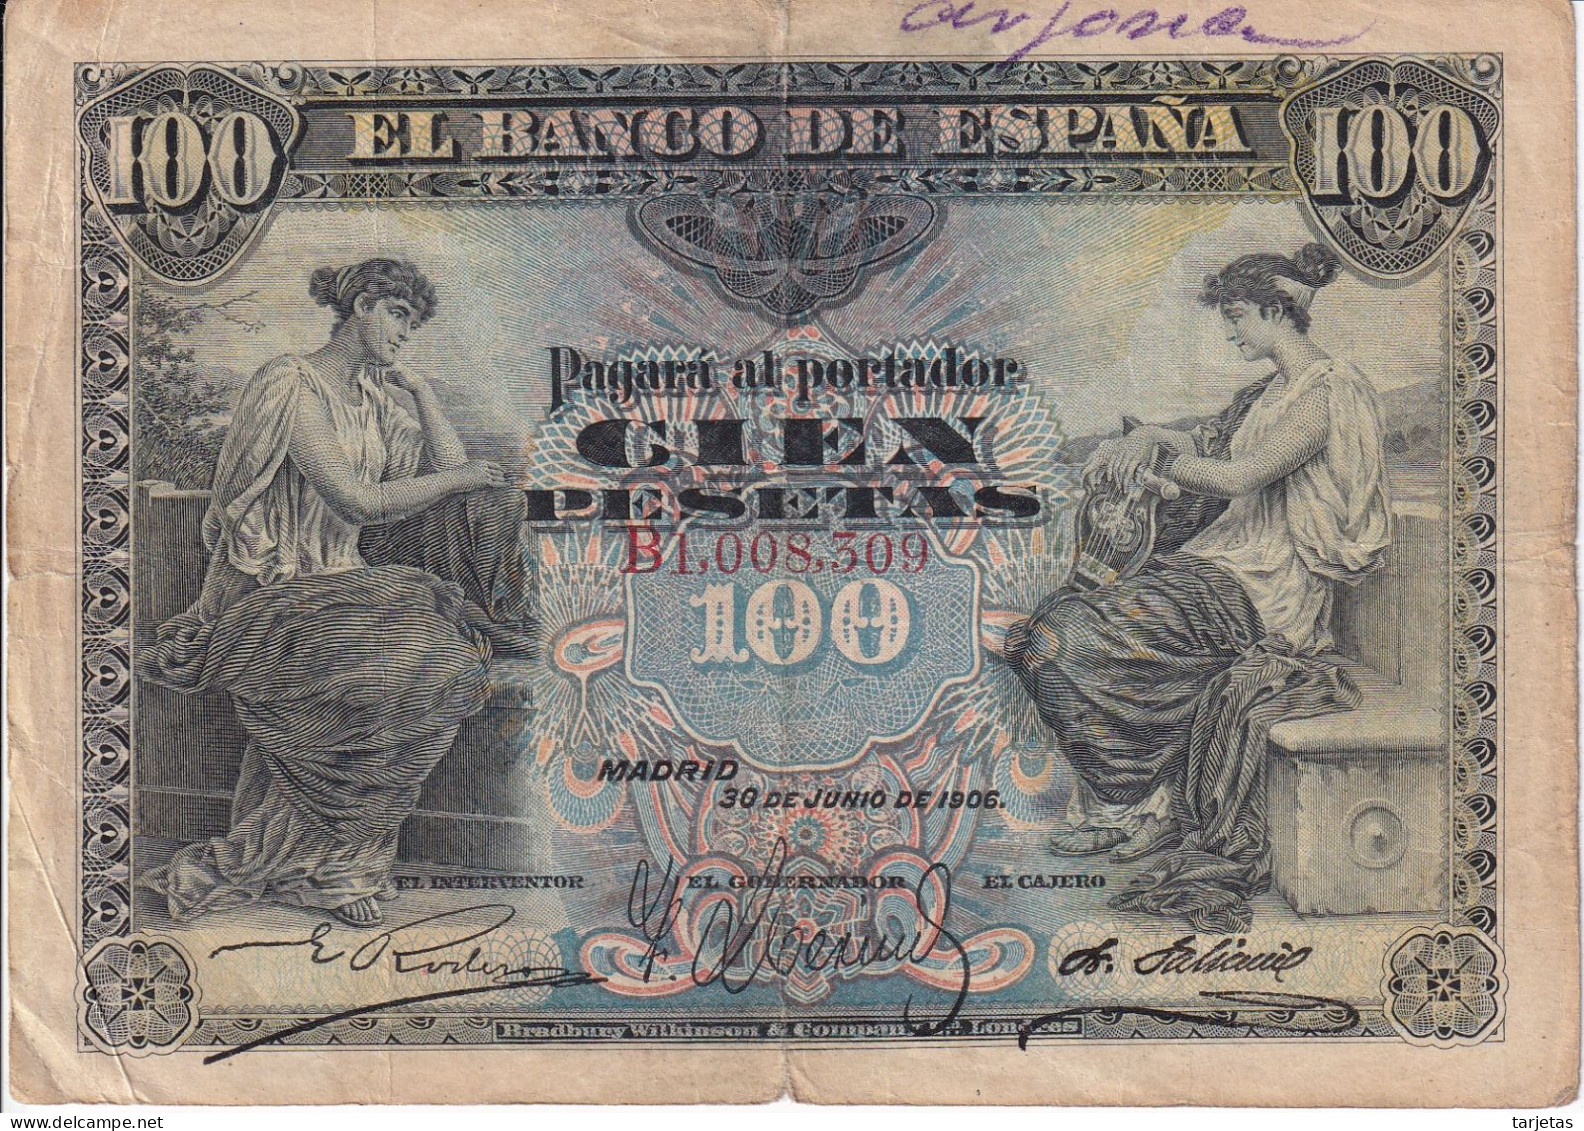 BILLETE CLASICO DE 100 PTAS DEL AÑO 1906 SERIE B (BANKNOTE) - 100 Peseten